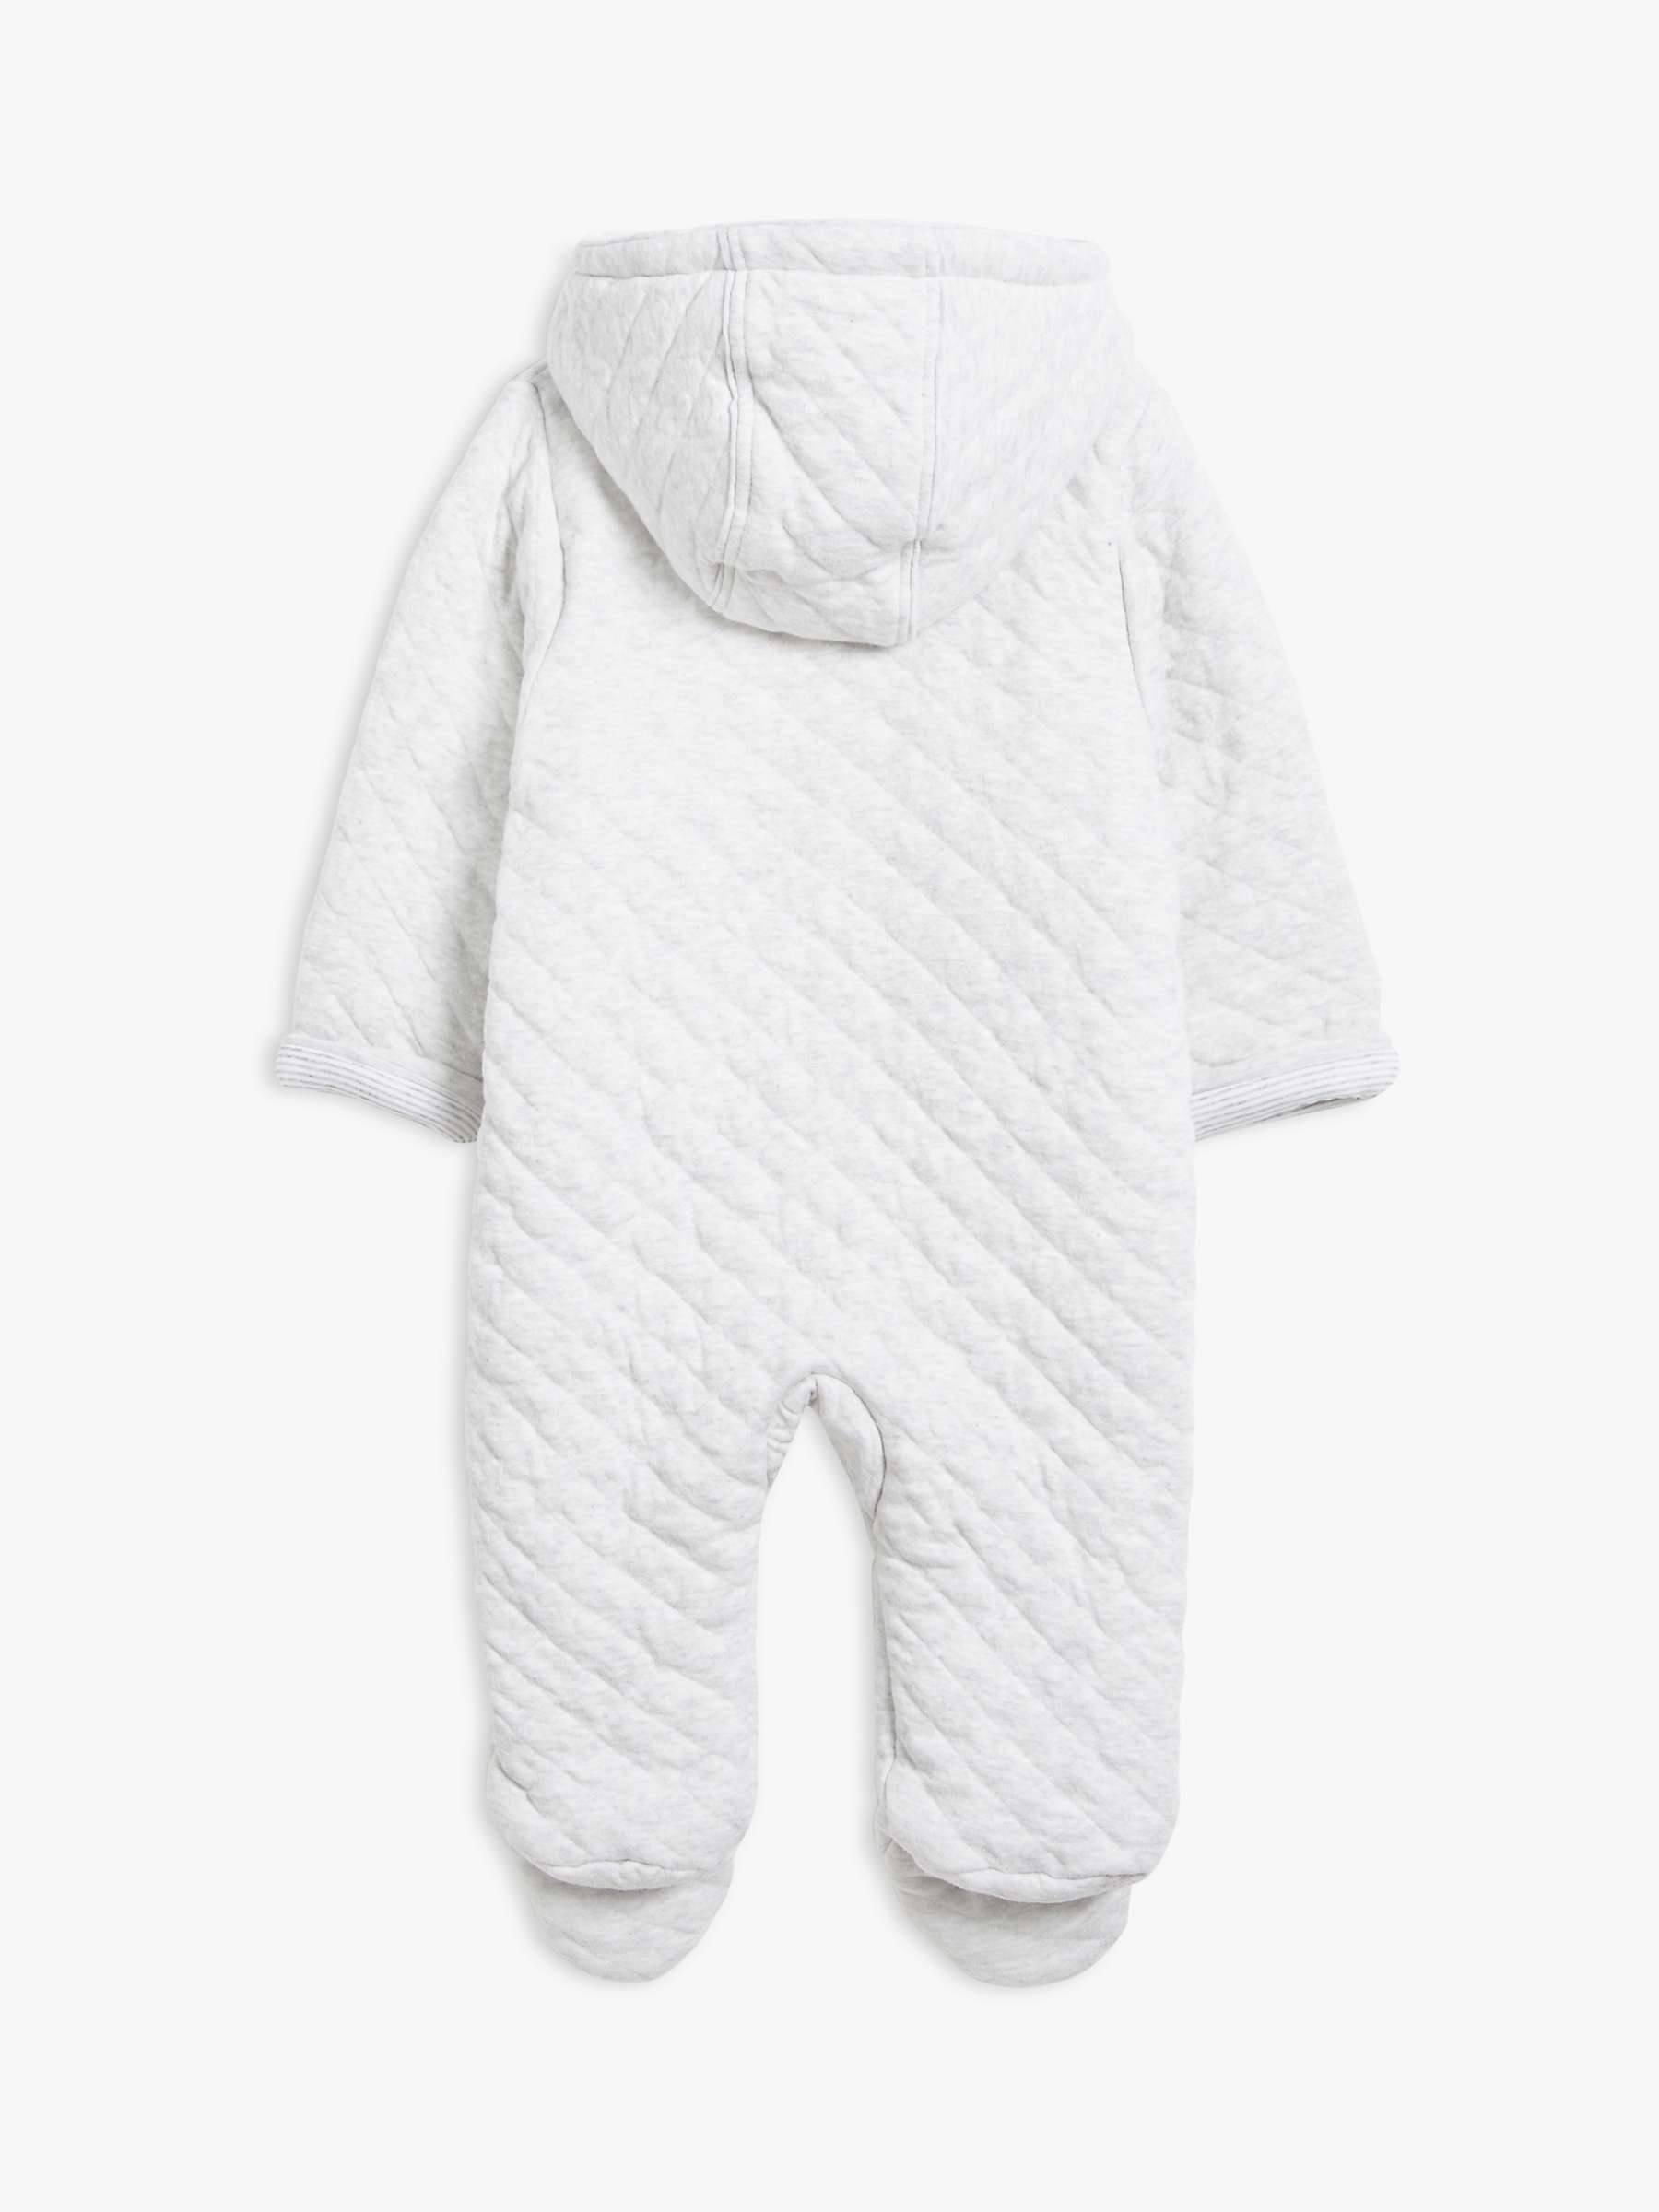 Buy John Lewis Baby Quilt Wadded Pramsuit Online at johnlewis.com